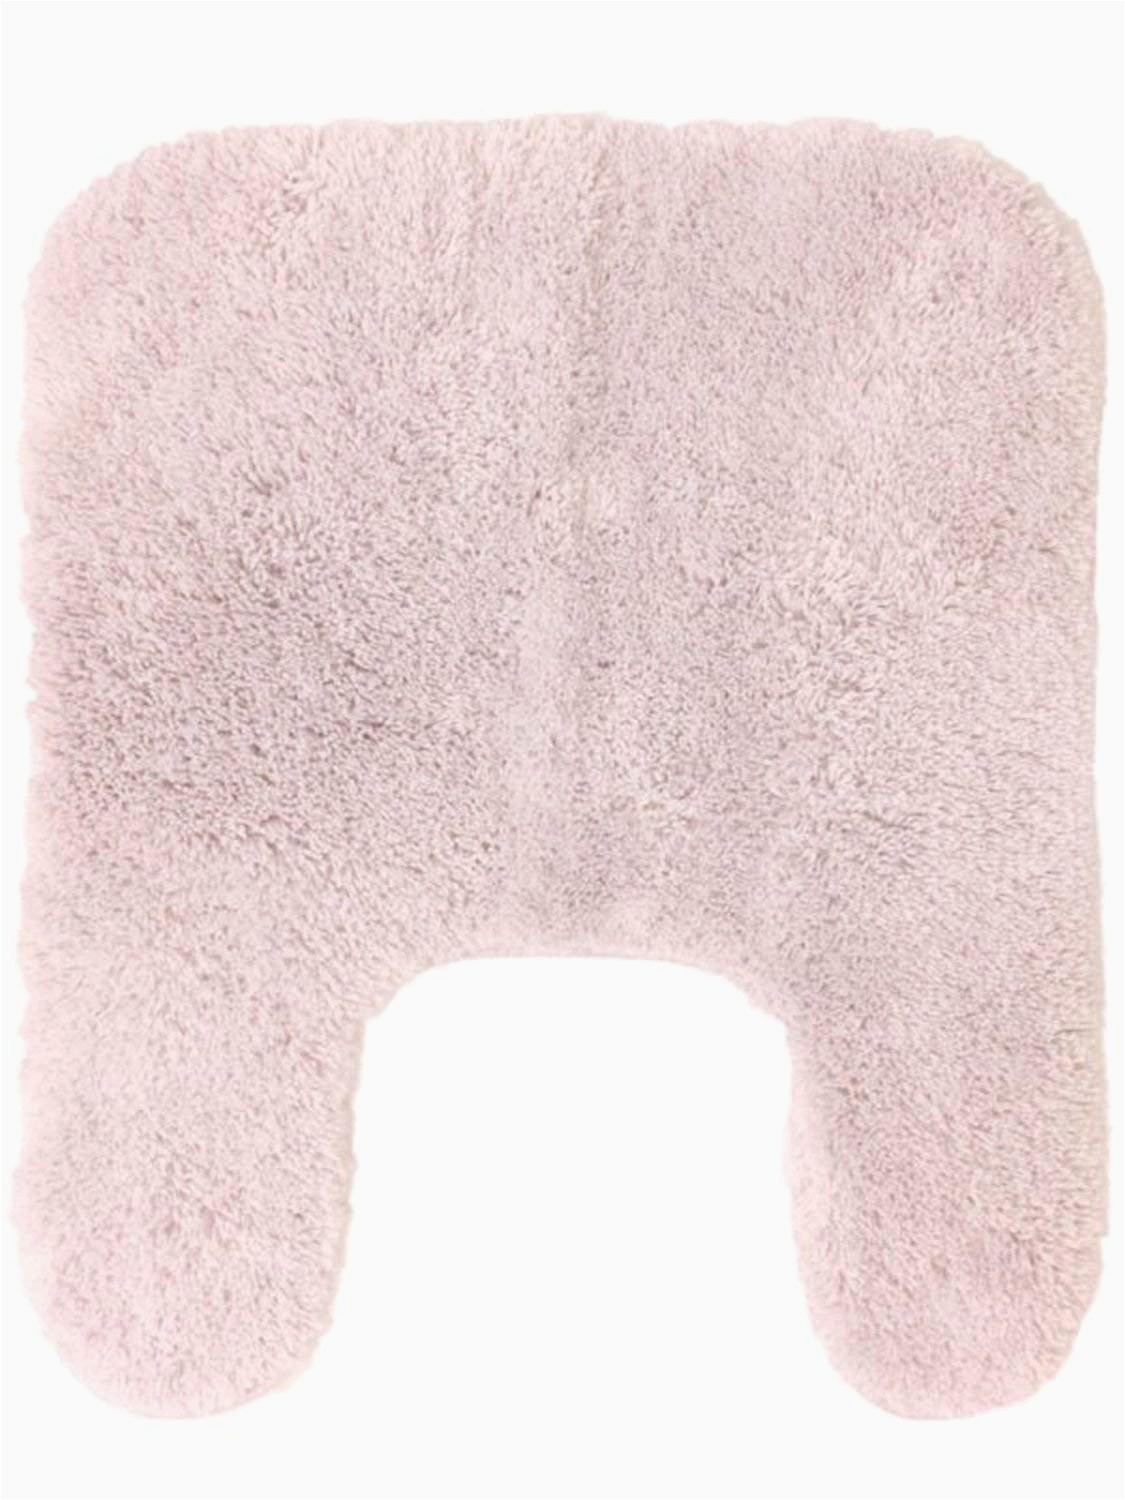 Blush Pink Bath Rugs Ultimate Light Blush Pink Skid Resistant Bath Rug 20×32